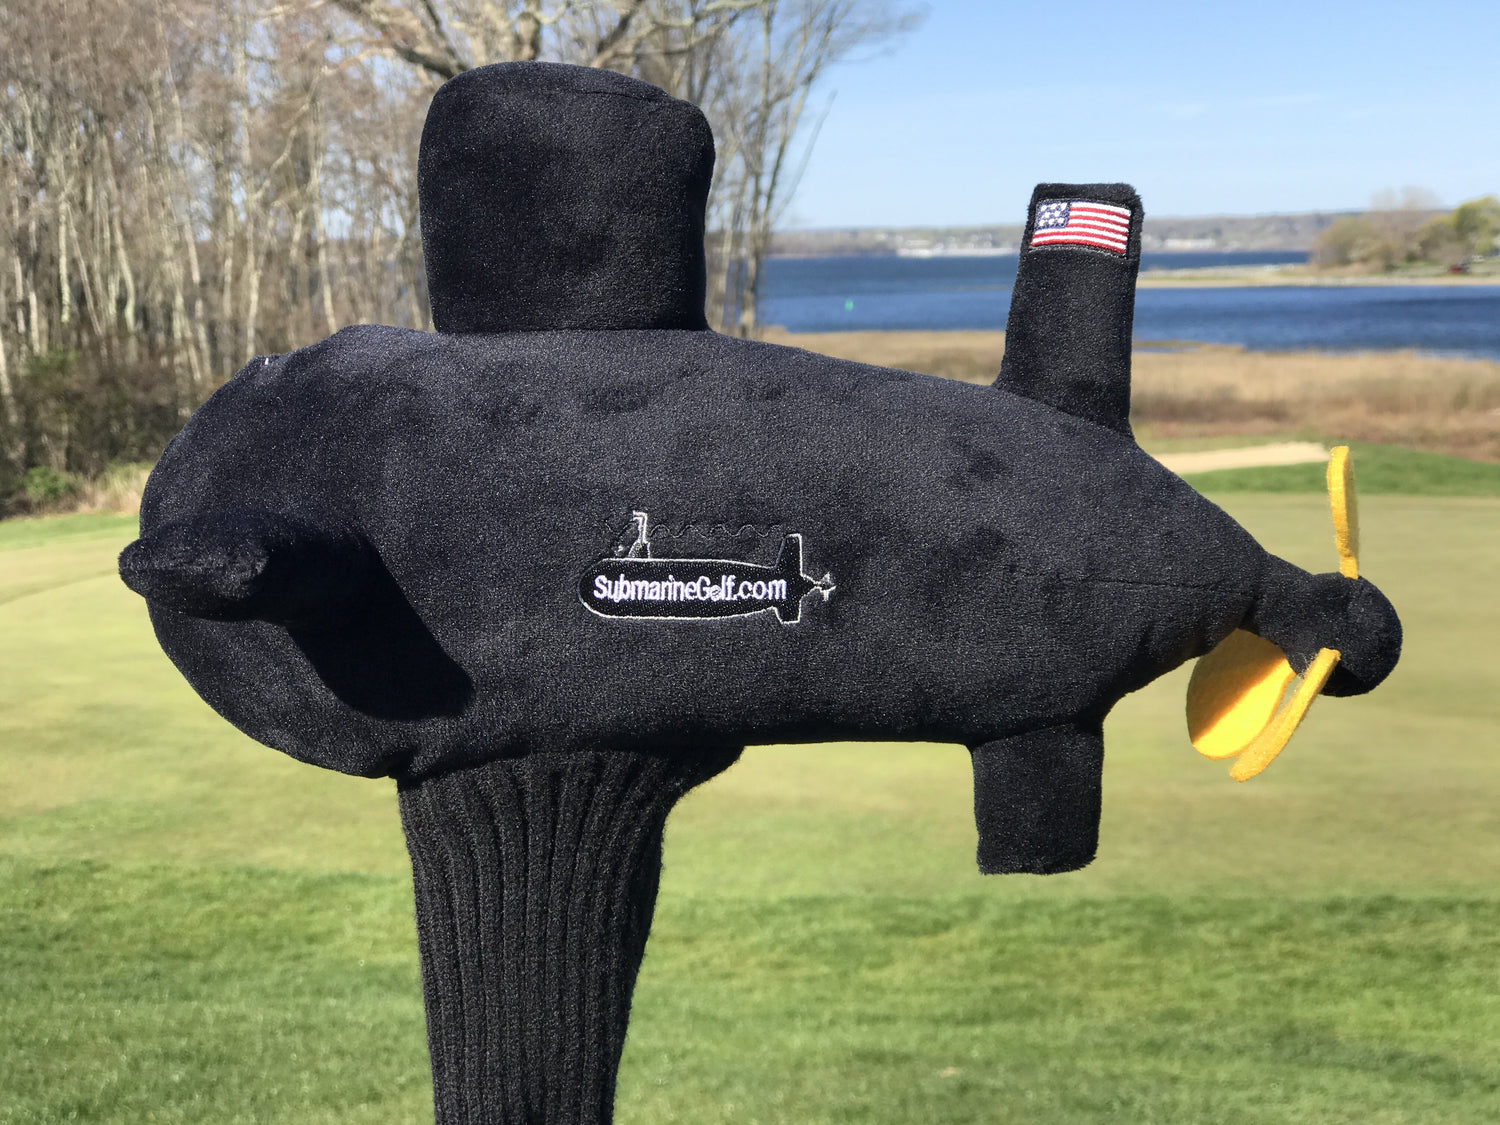 Golf ball gift pack – Submarinegolf